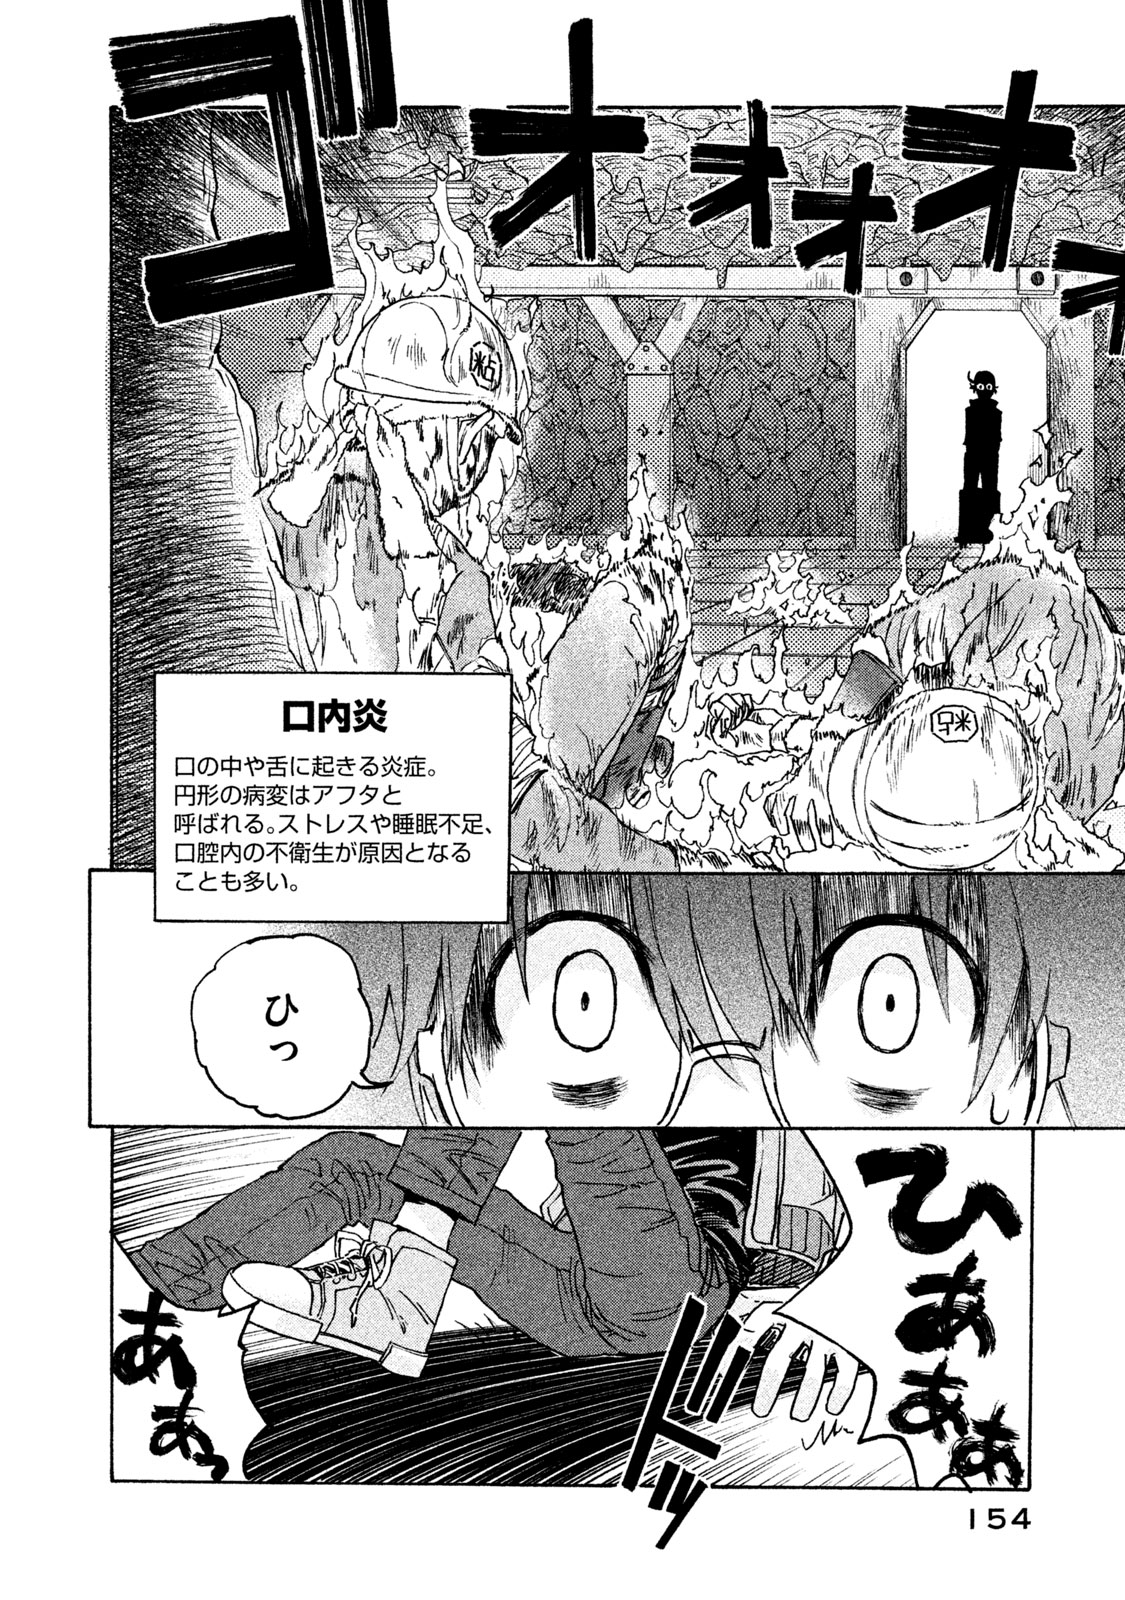 Hataraku Saibou BLACK - Chapter 24 - Page 28